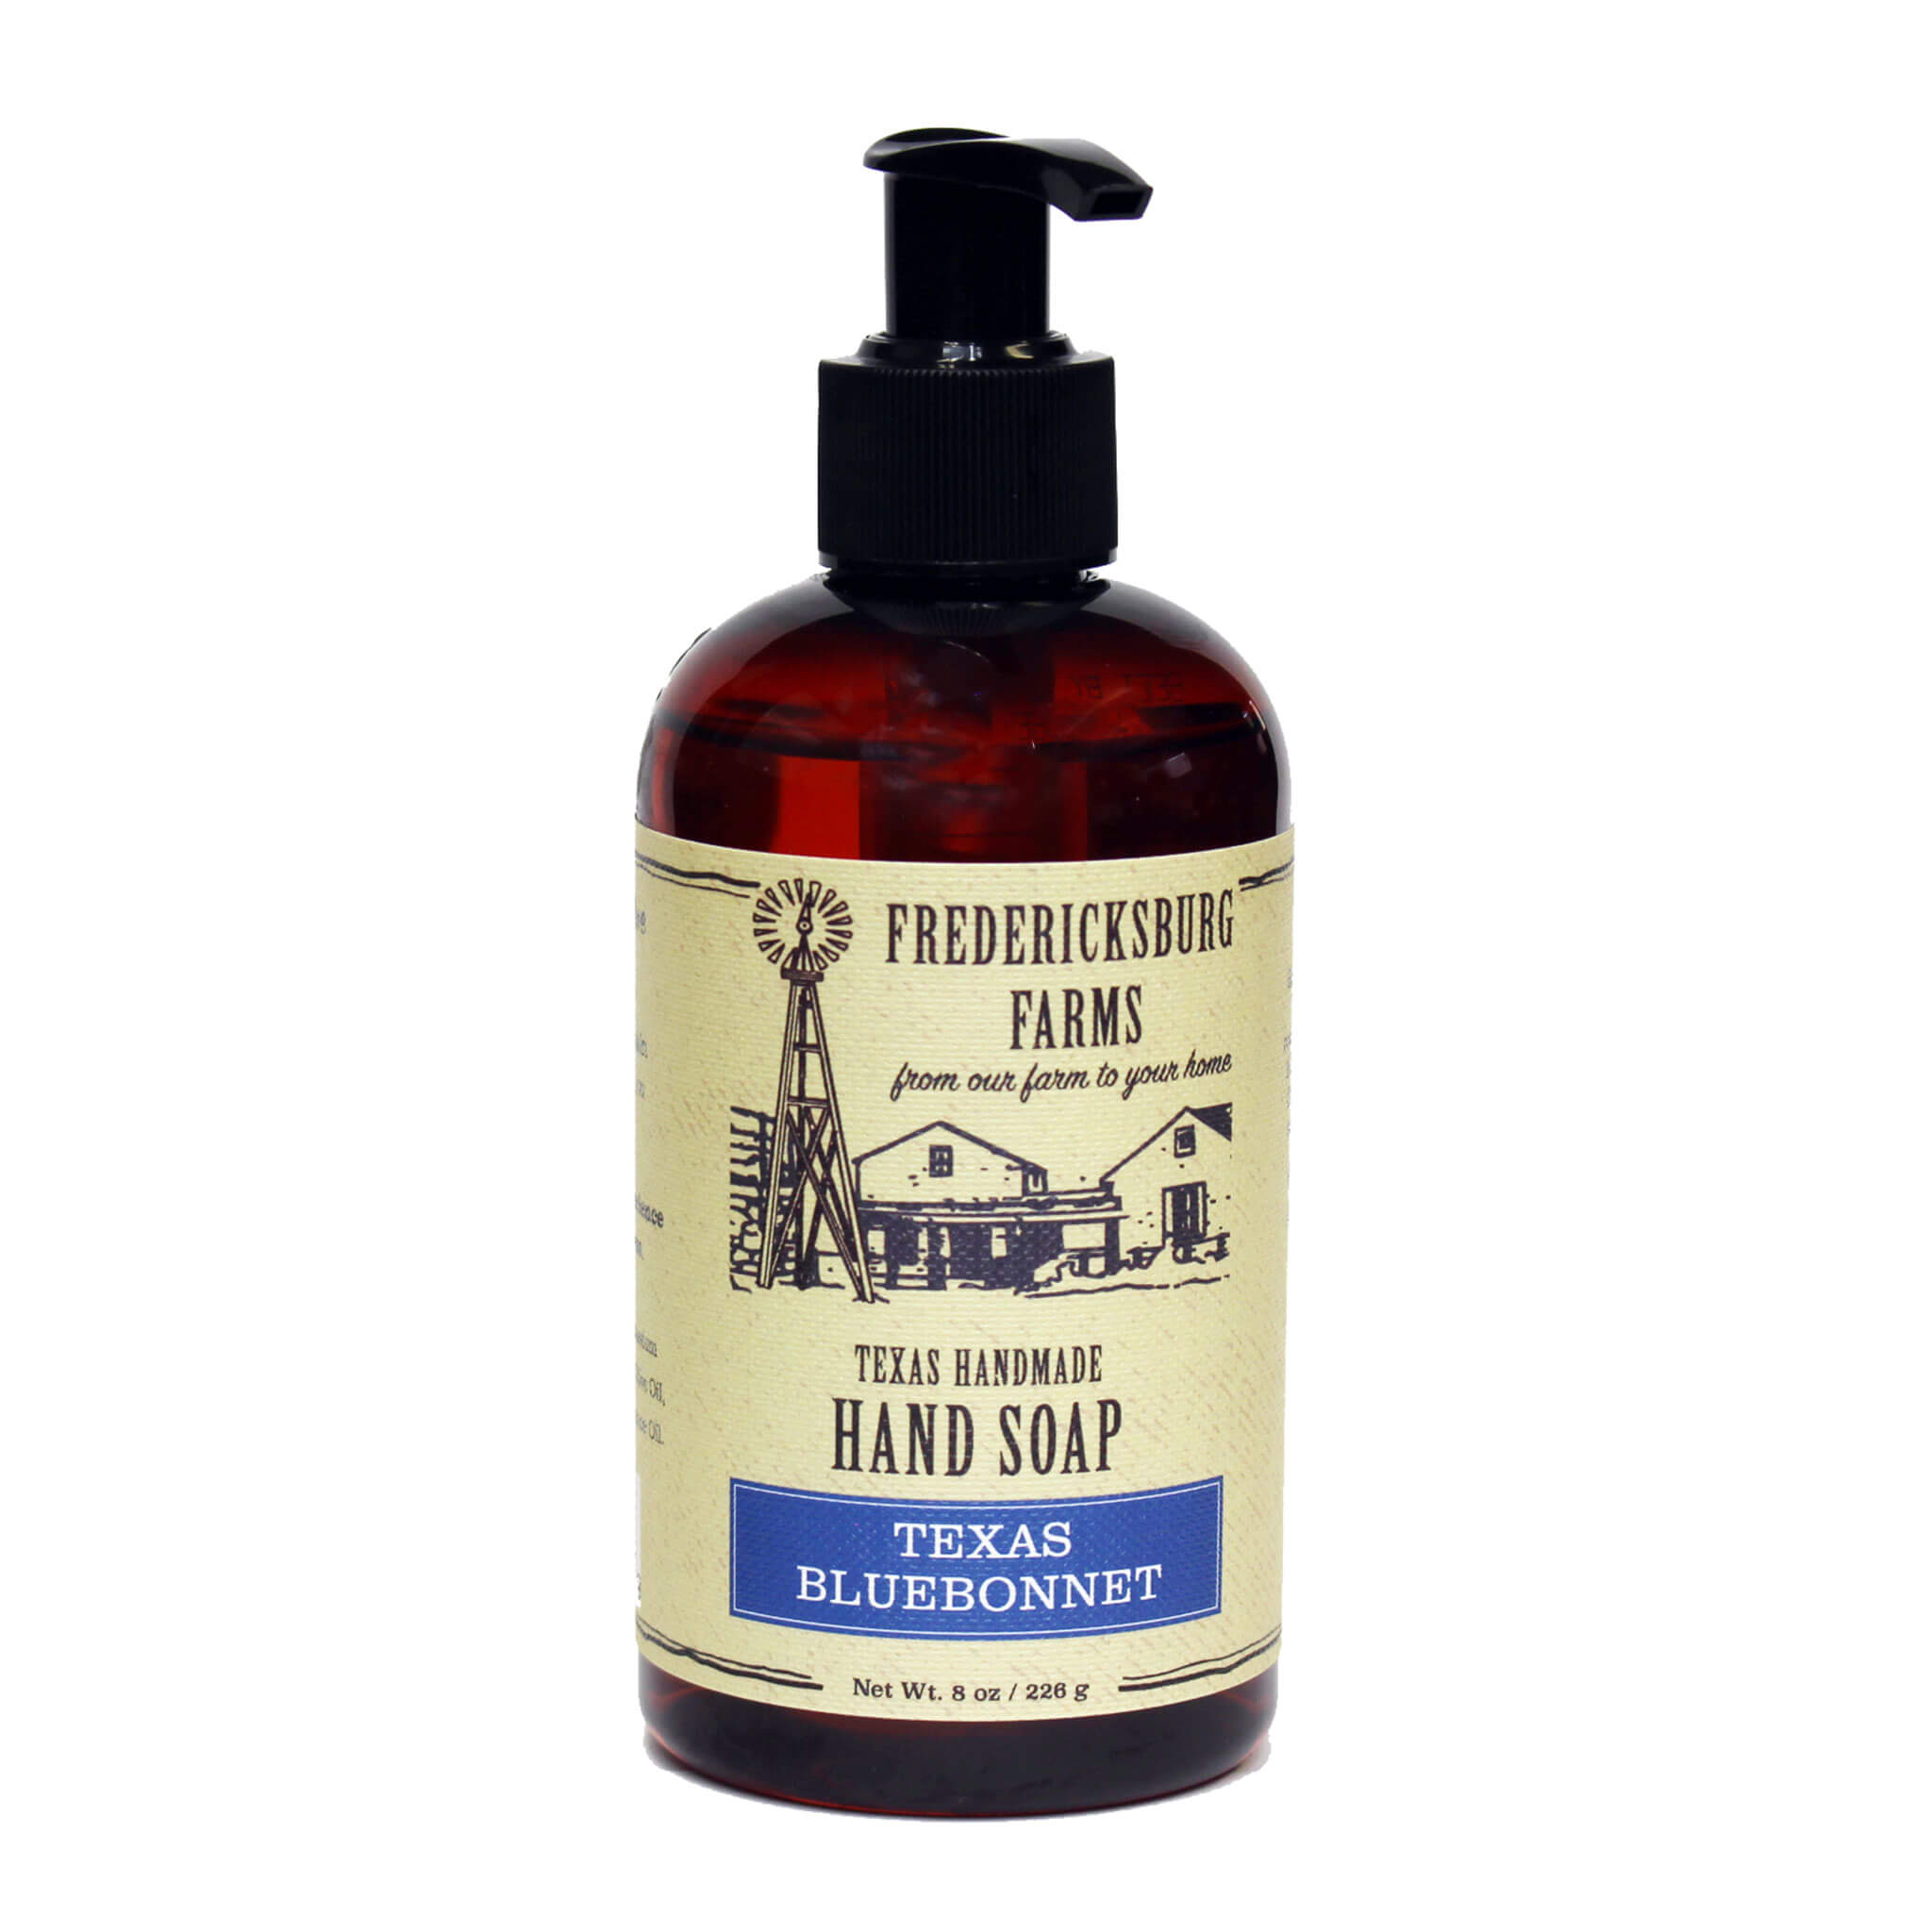 Texas Bluebonnet Handmade Hand Soap - Fredericksburg Farms